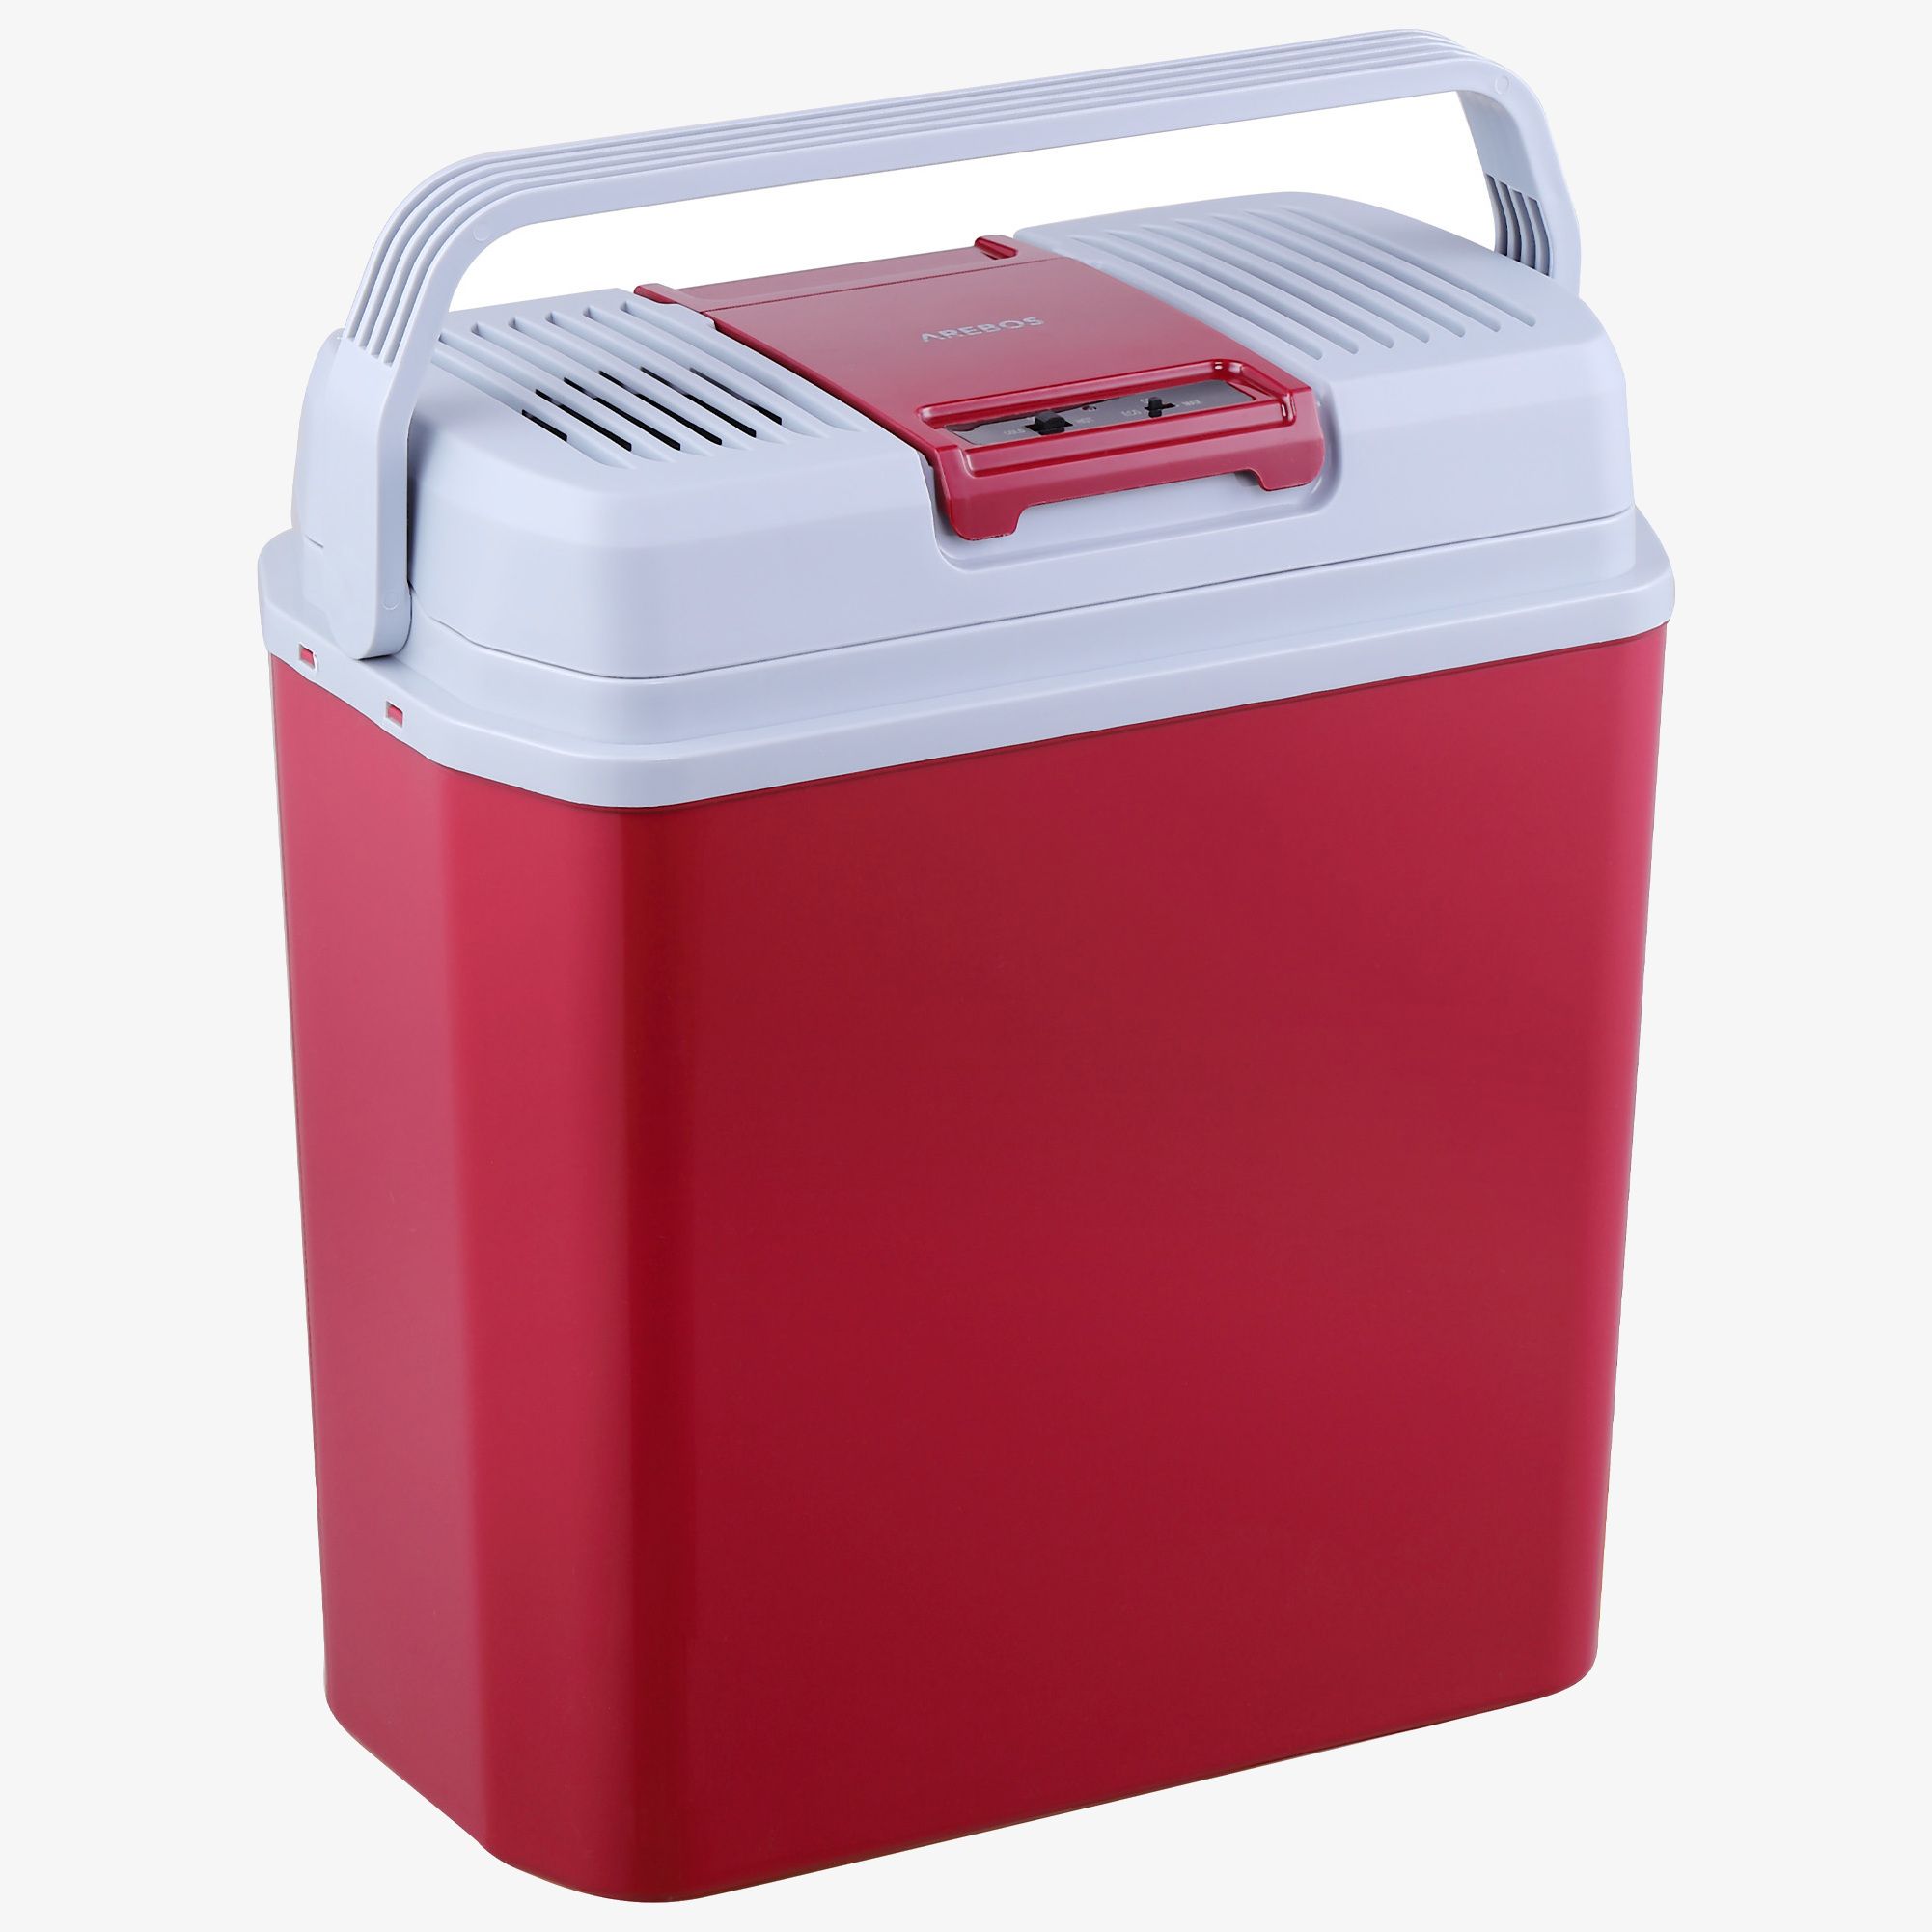 UISEBRT Outdoor-Flaschenkühler Kühlbox Thermo-Elektrisch 12 V 220V, 30L